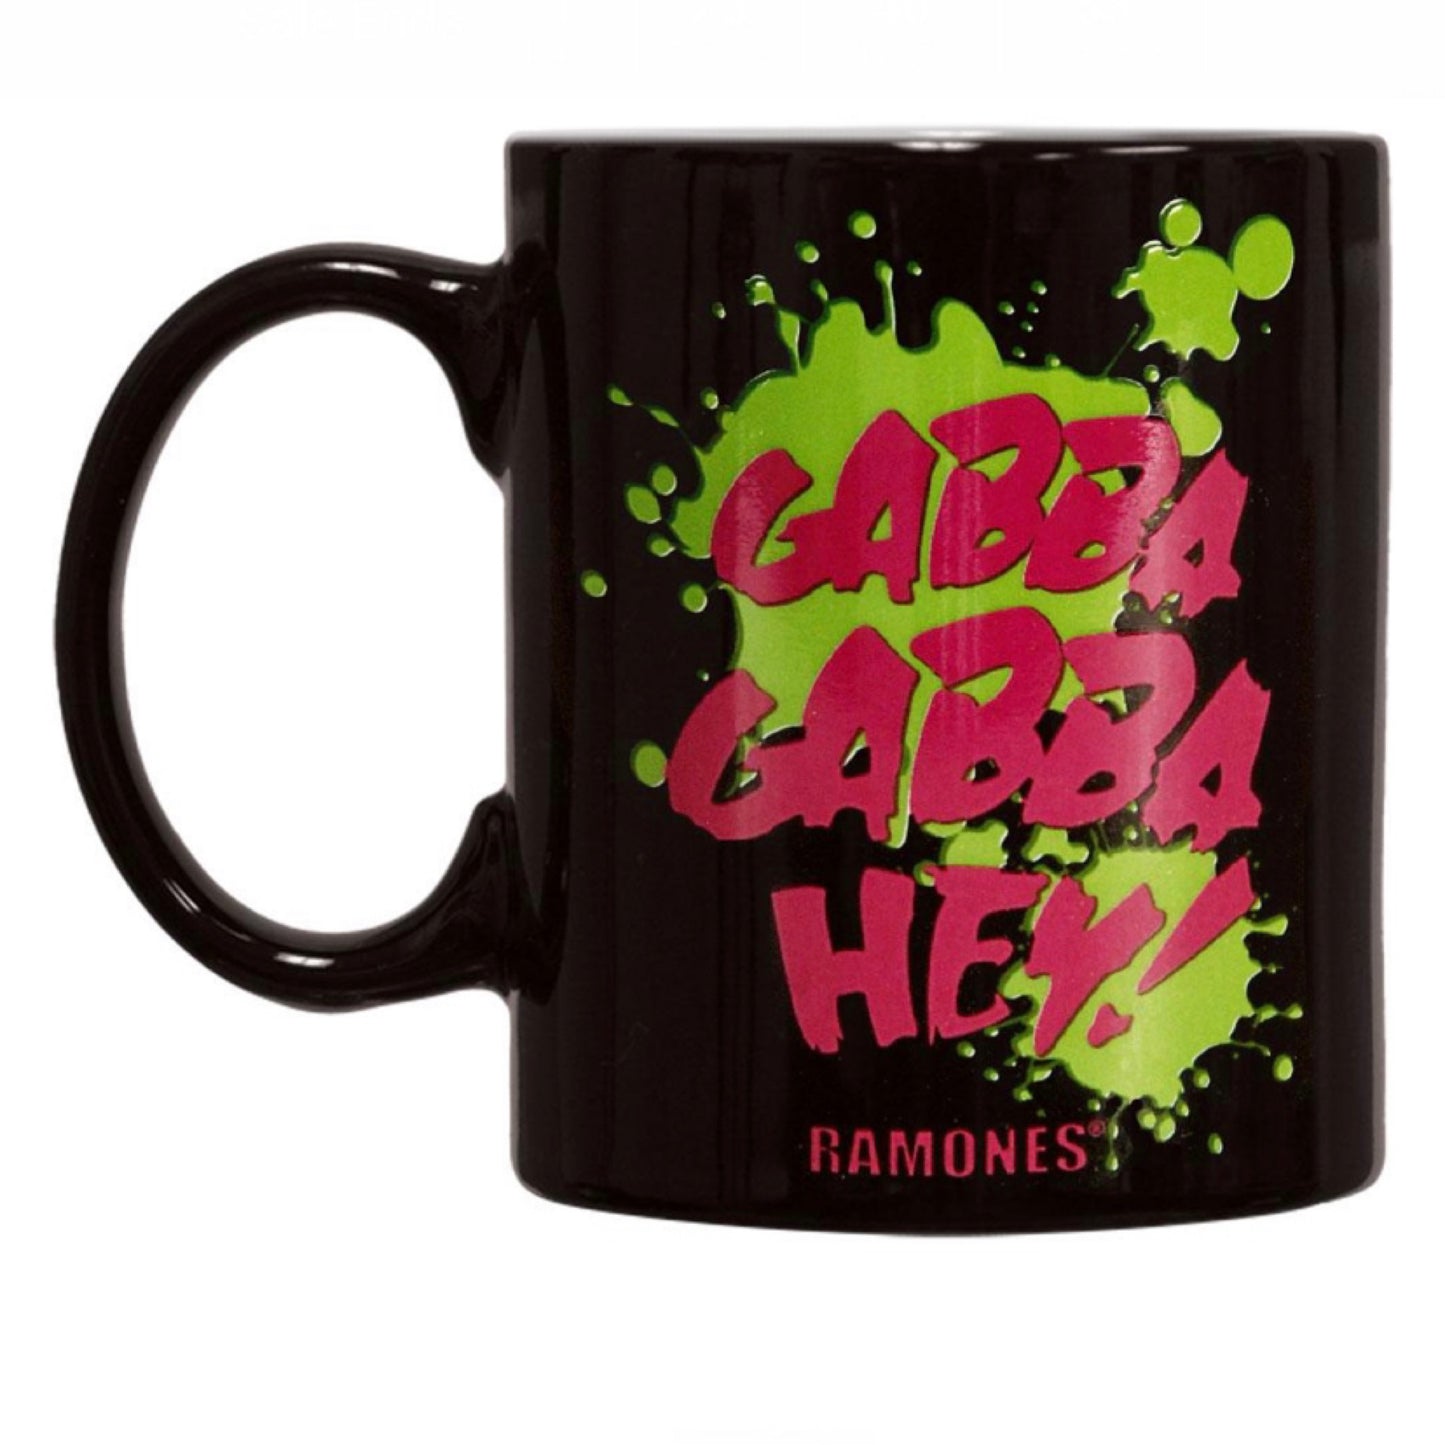 COFFEE MUG RAMONES - GABBA GABBA HEY BOXED 320 ml CERAMIC